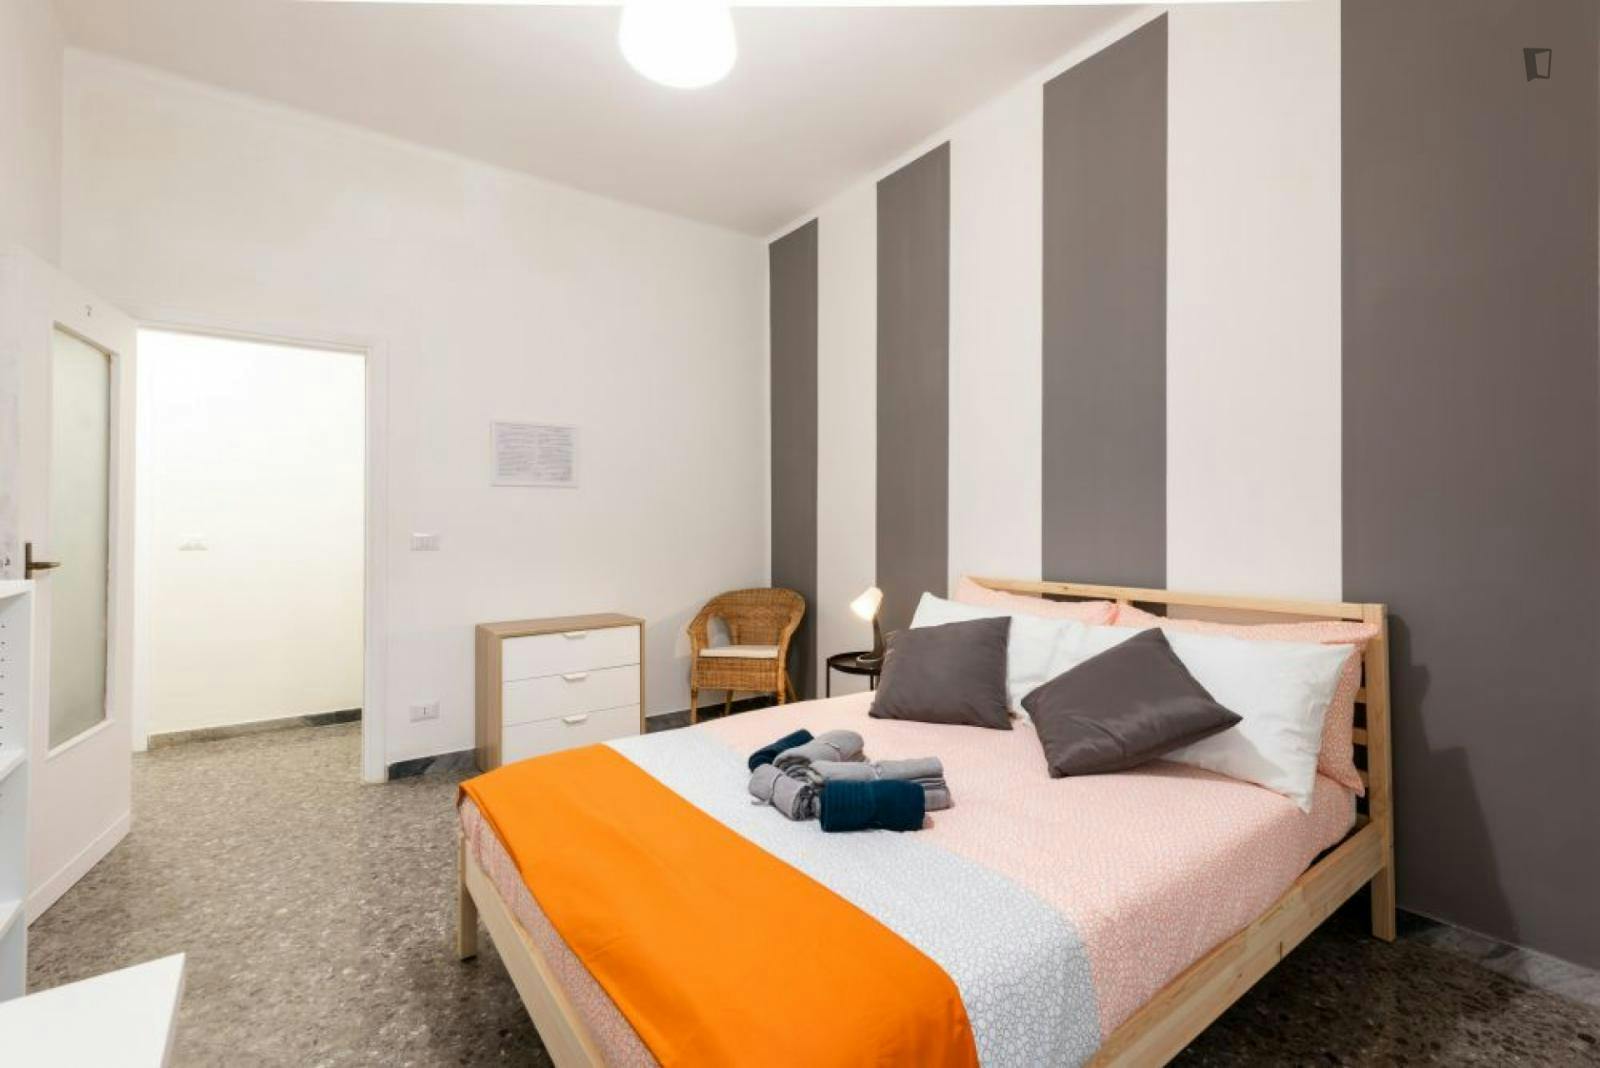 Beautiful double bedroom in a 4-bedroom apartment near Bari F. Crispi metro station